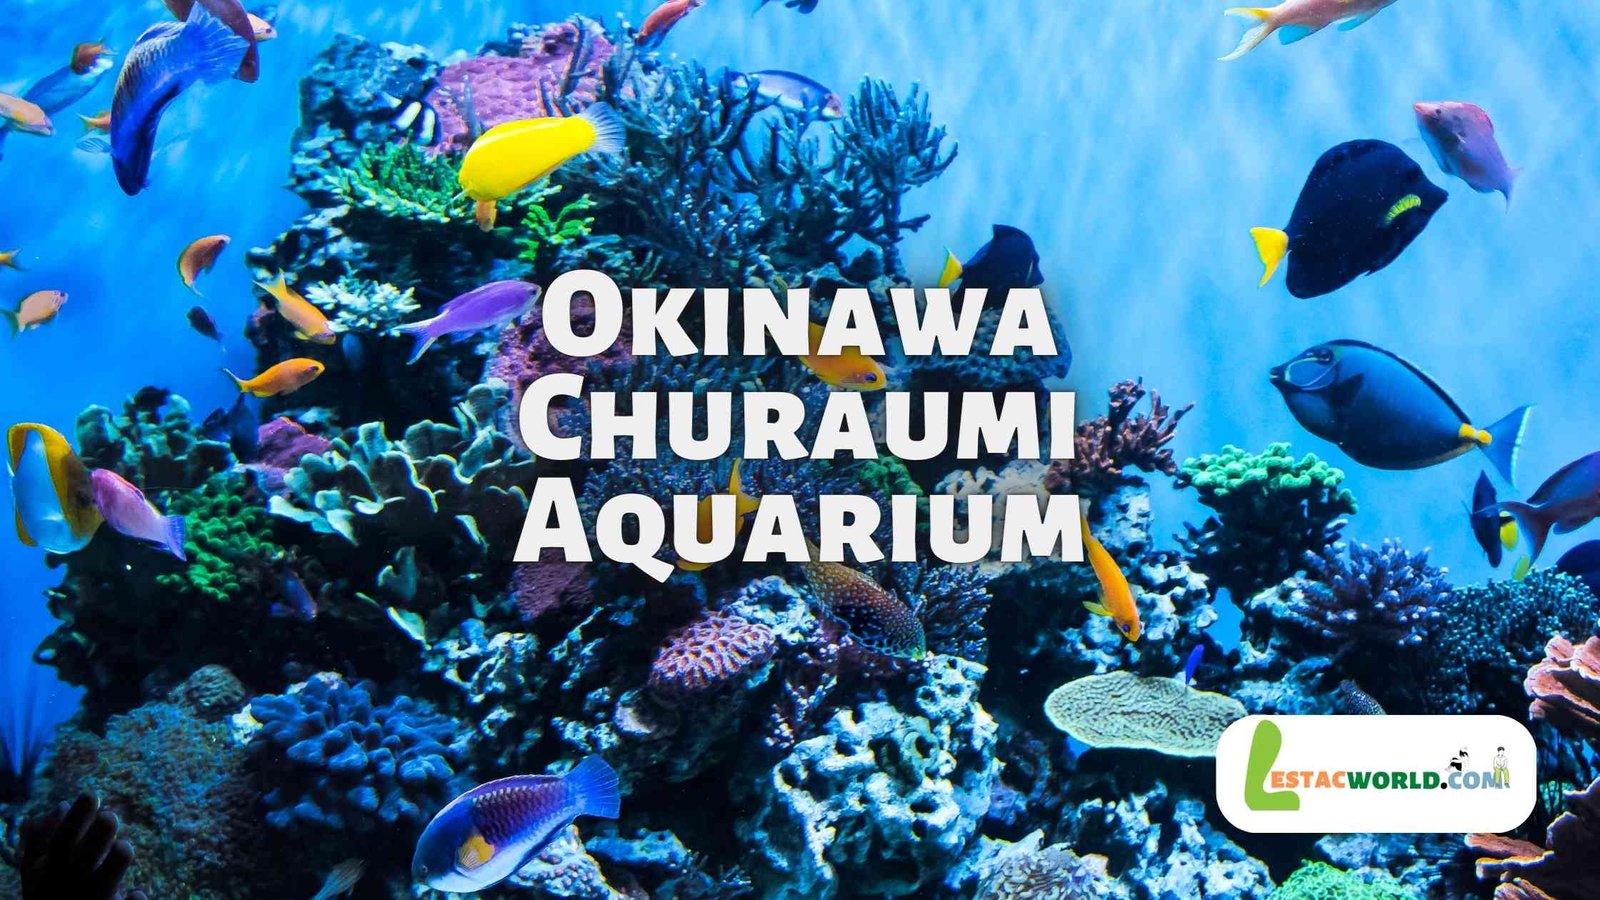 About Okinawa Churaumi Aquarium